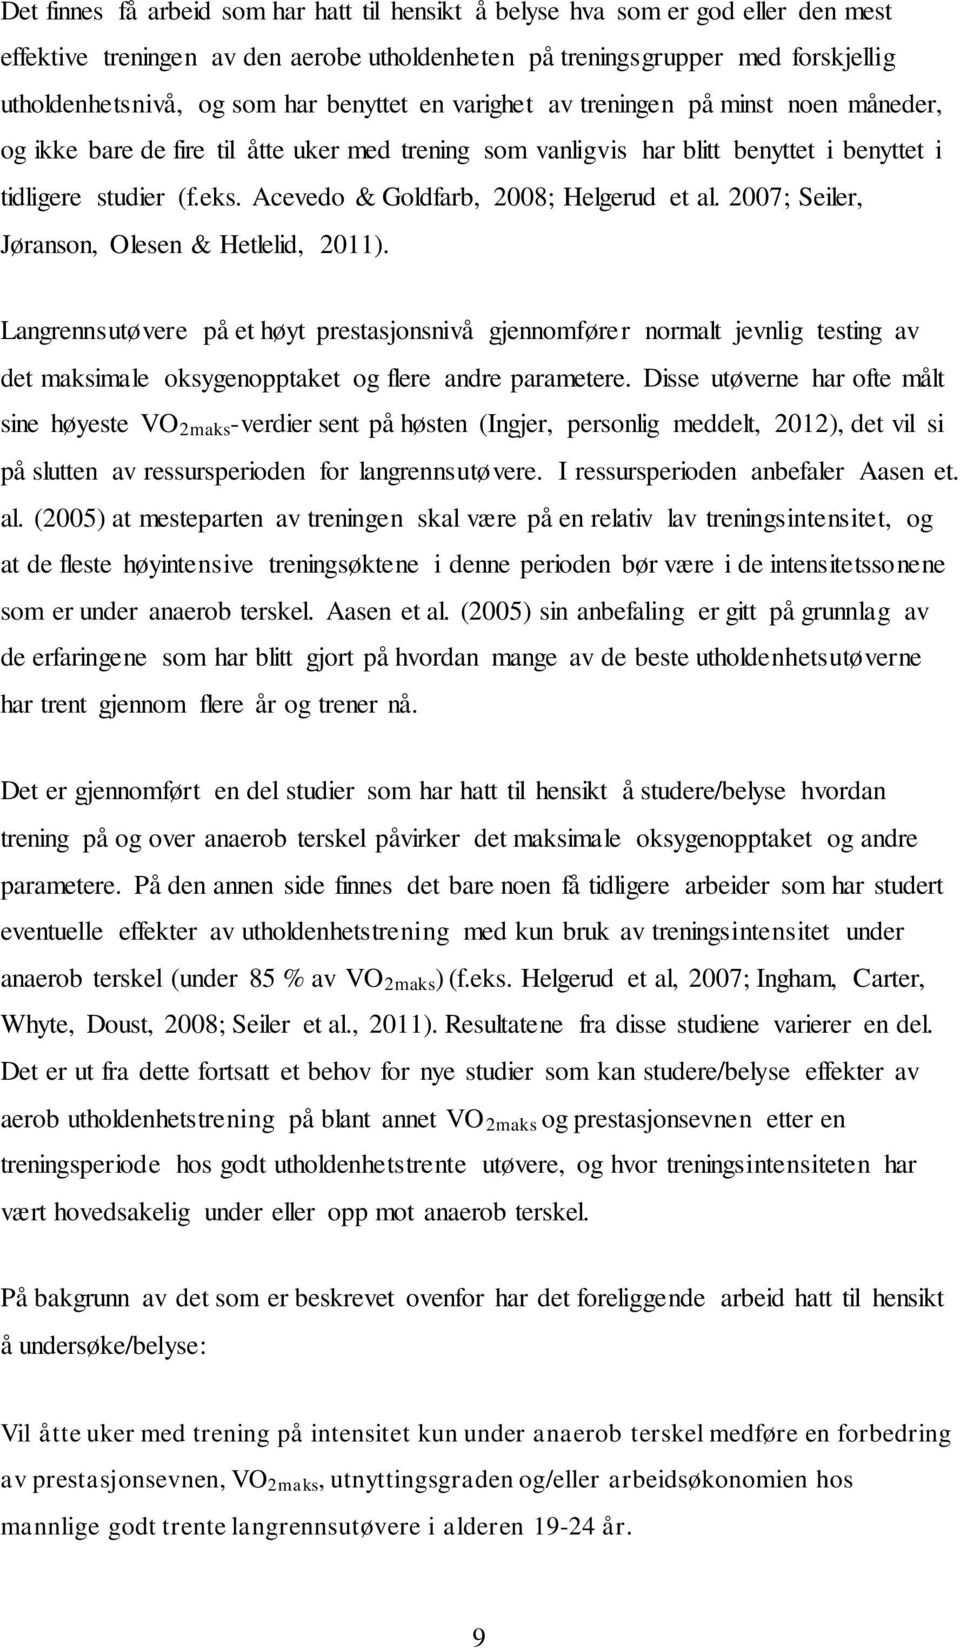 Acevedo & Goldfarb, 2008; Helgerud et al. 2007; Seiler, Jøranson, Olesen & Hetlelid, 2011).